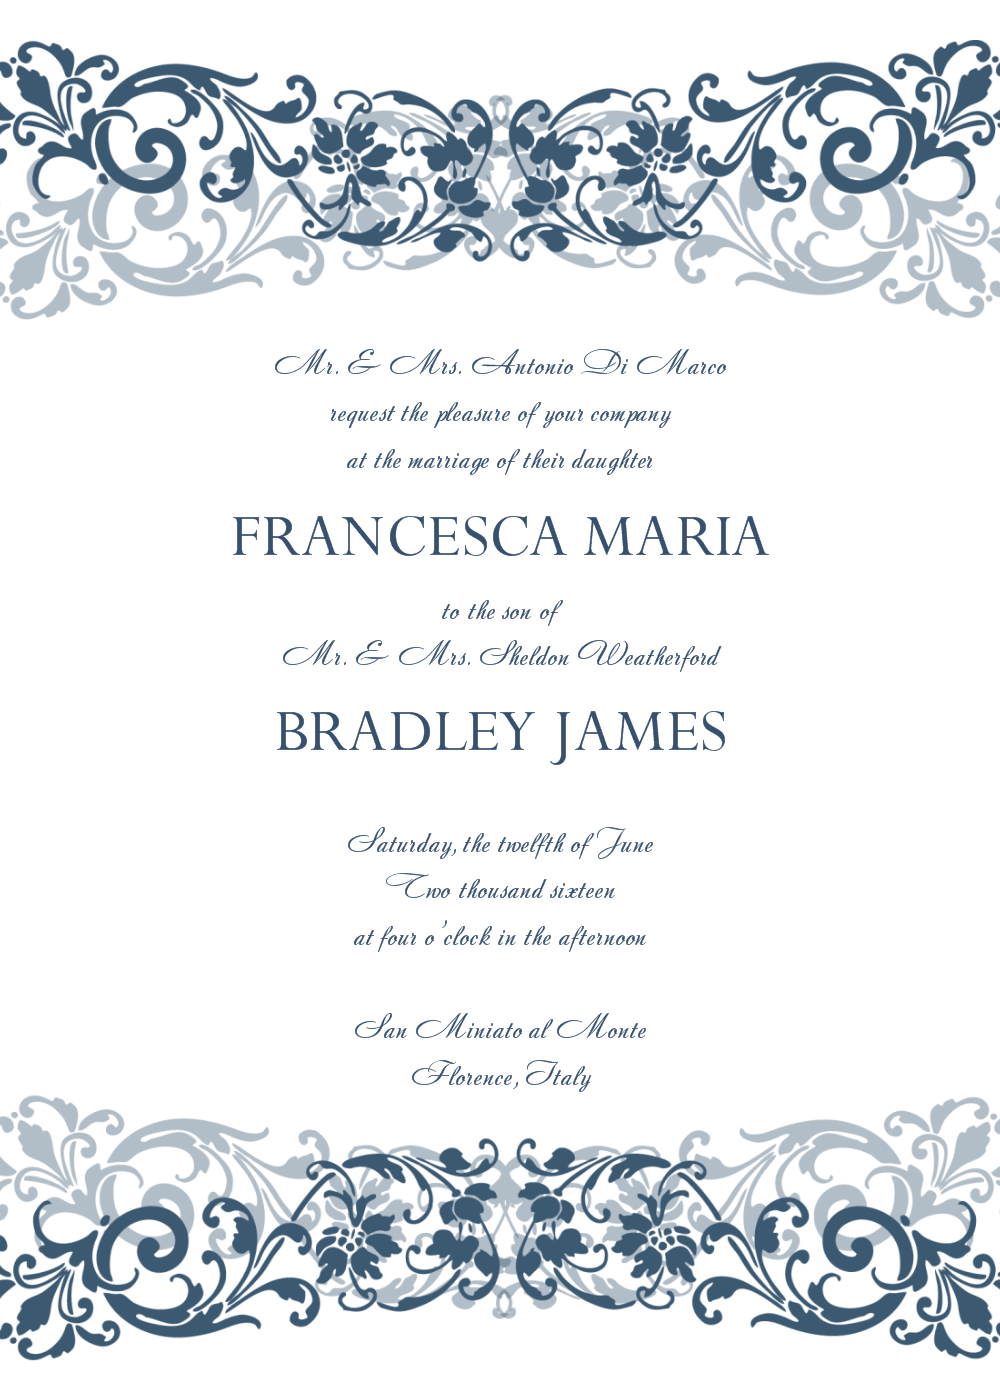 Wedding Invitations Templates 30 Free Wedding Invitations Templates 21st Bridal World